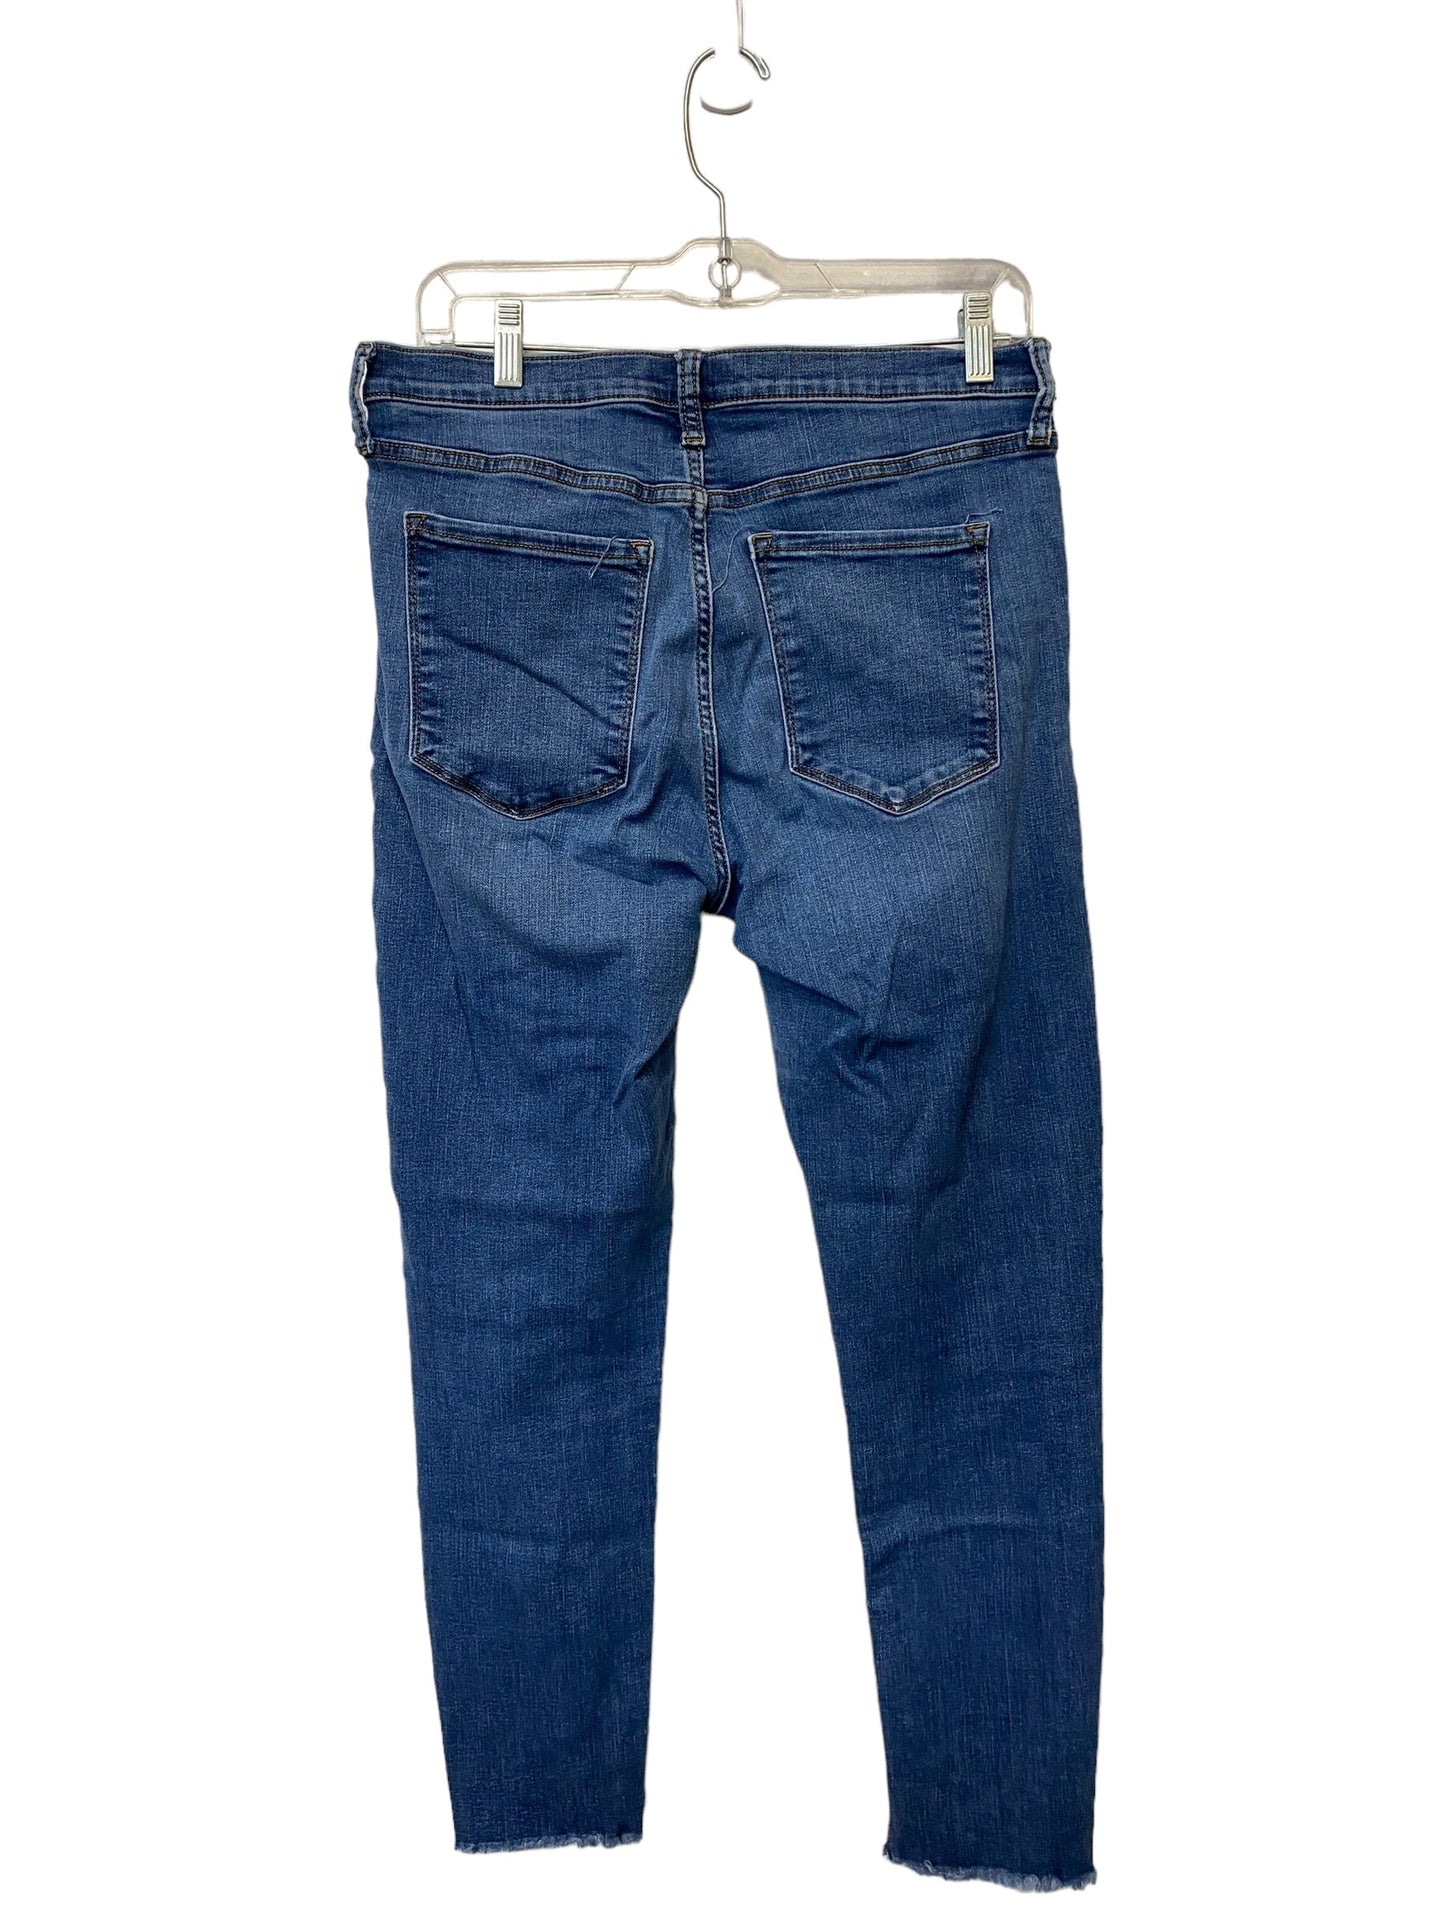 Blue Denim Jeans Skinny Banana Republic, Size 10